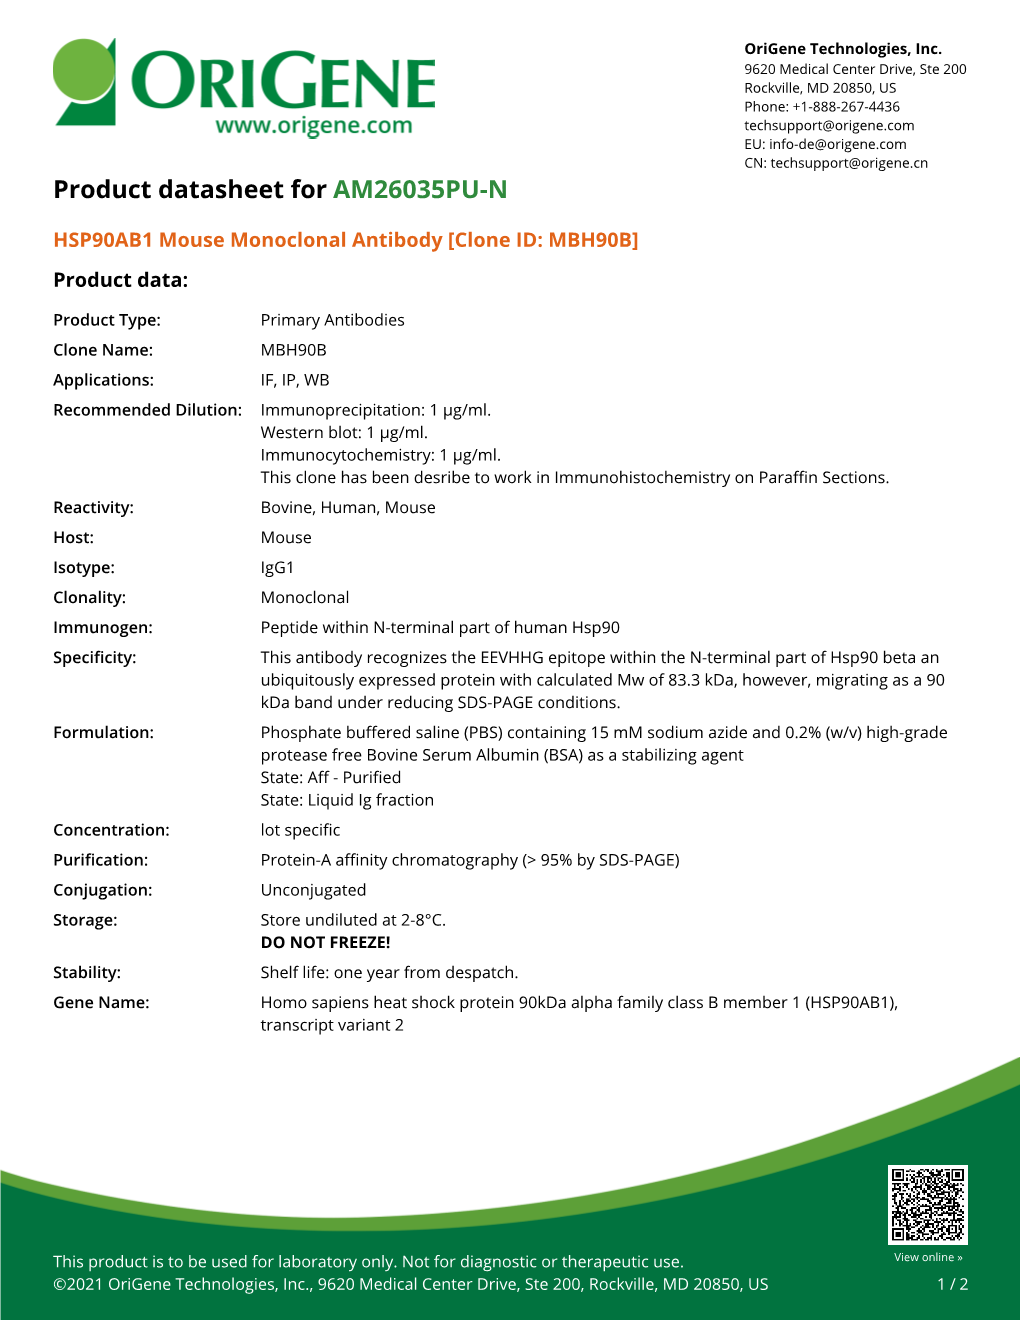 HSP90AB1 Mouse Monoclonal Antibody [Clone ID: MBH90B] Product Data